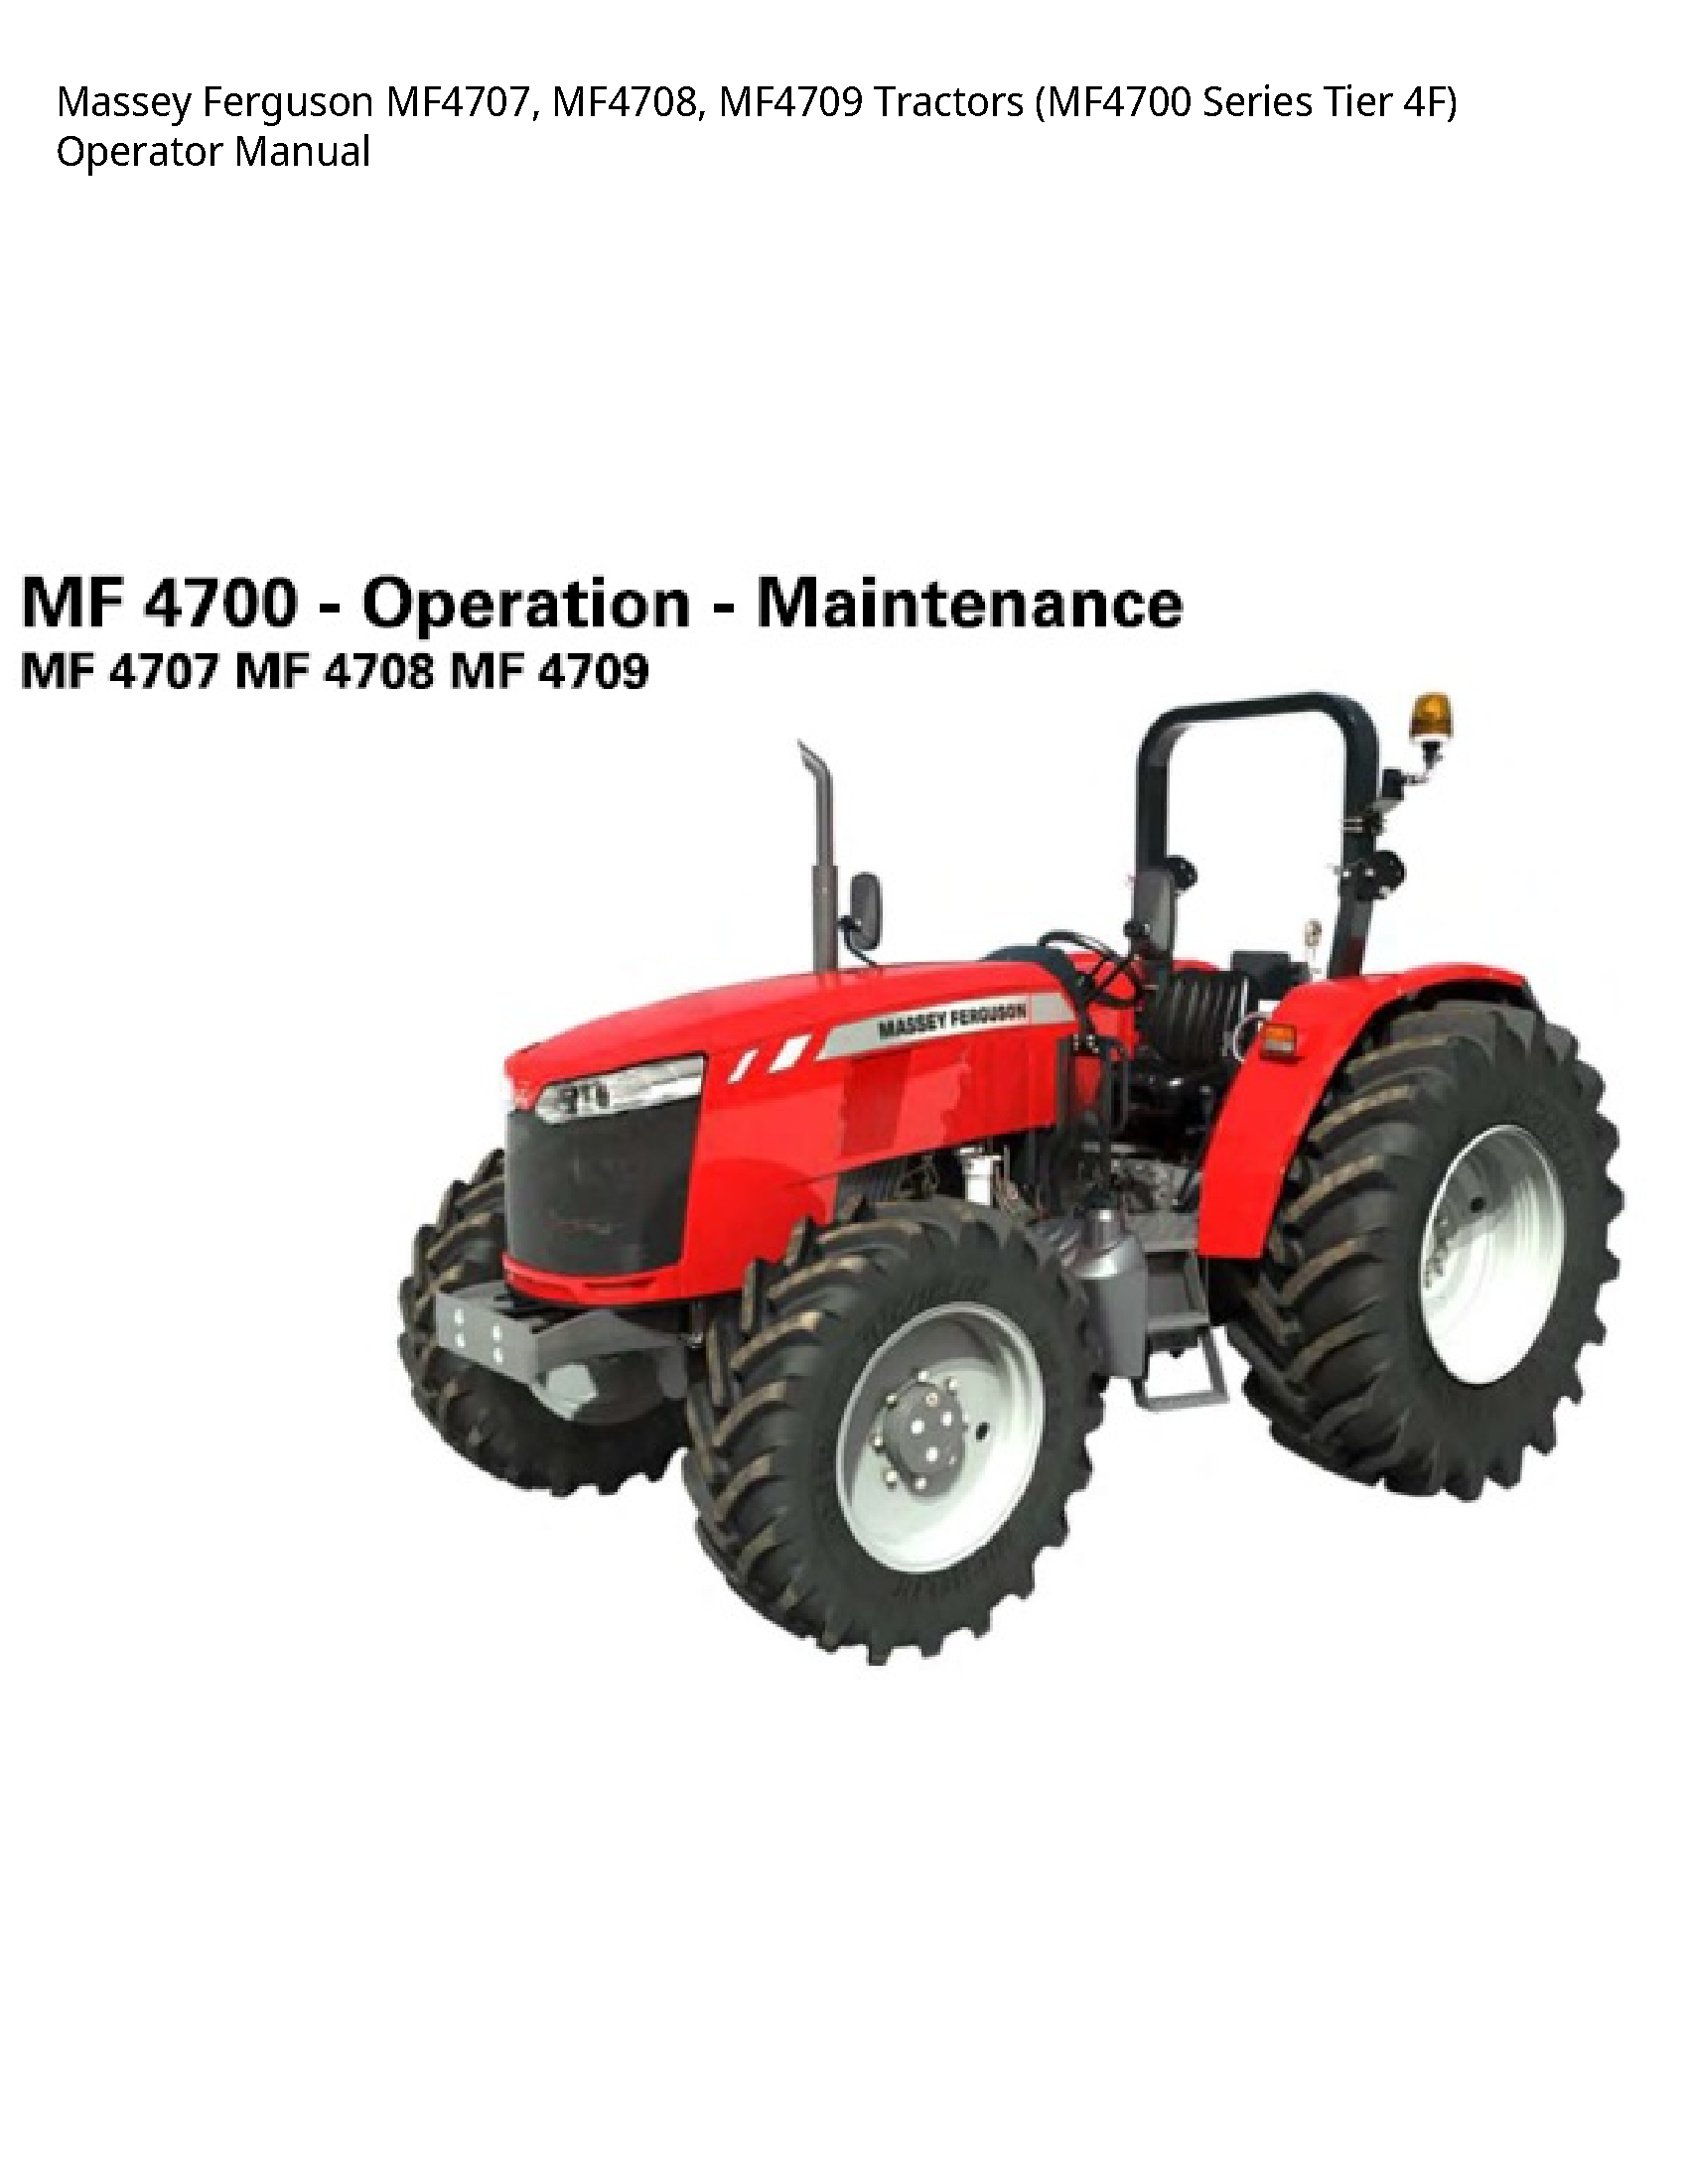 Massey Ferguson MF4707 Tractors Series Tier Operator manual